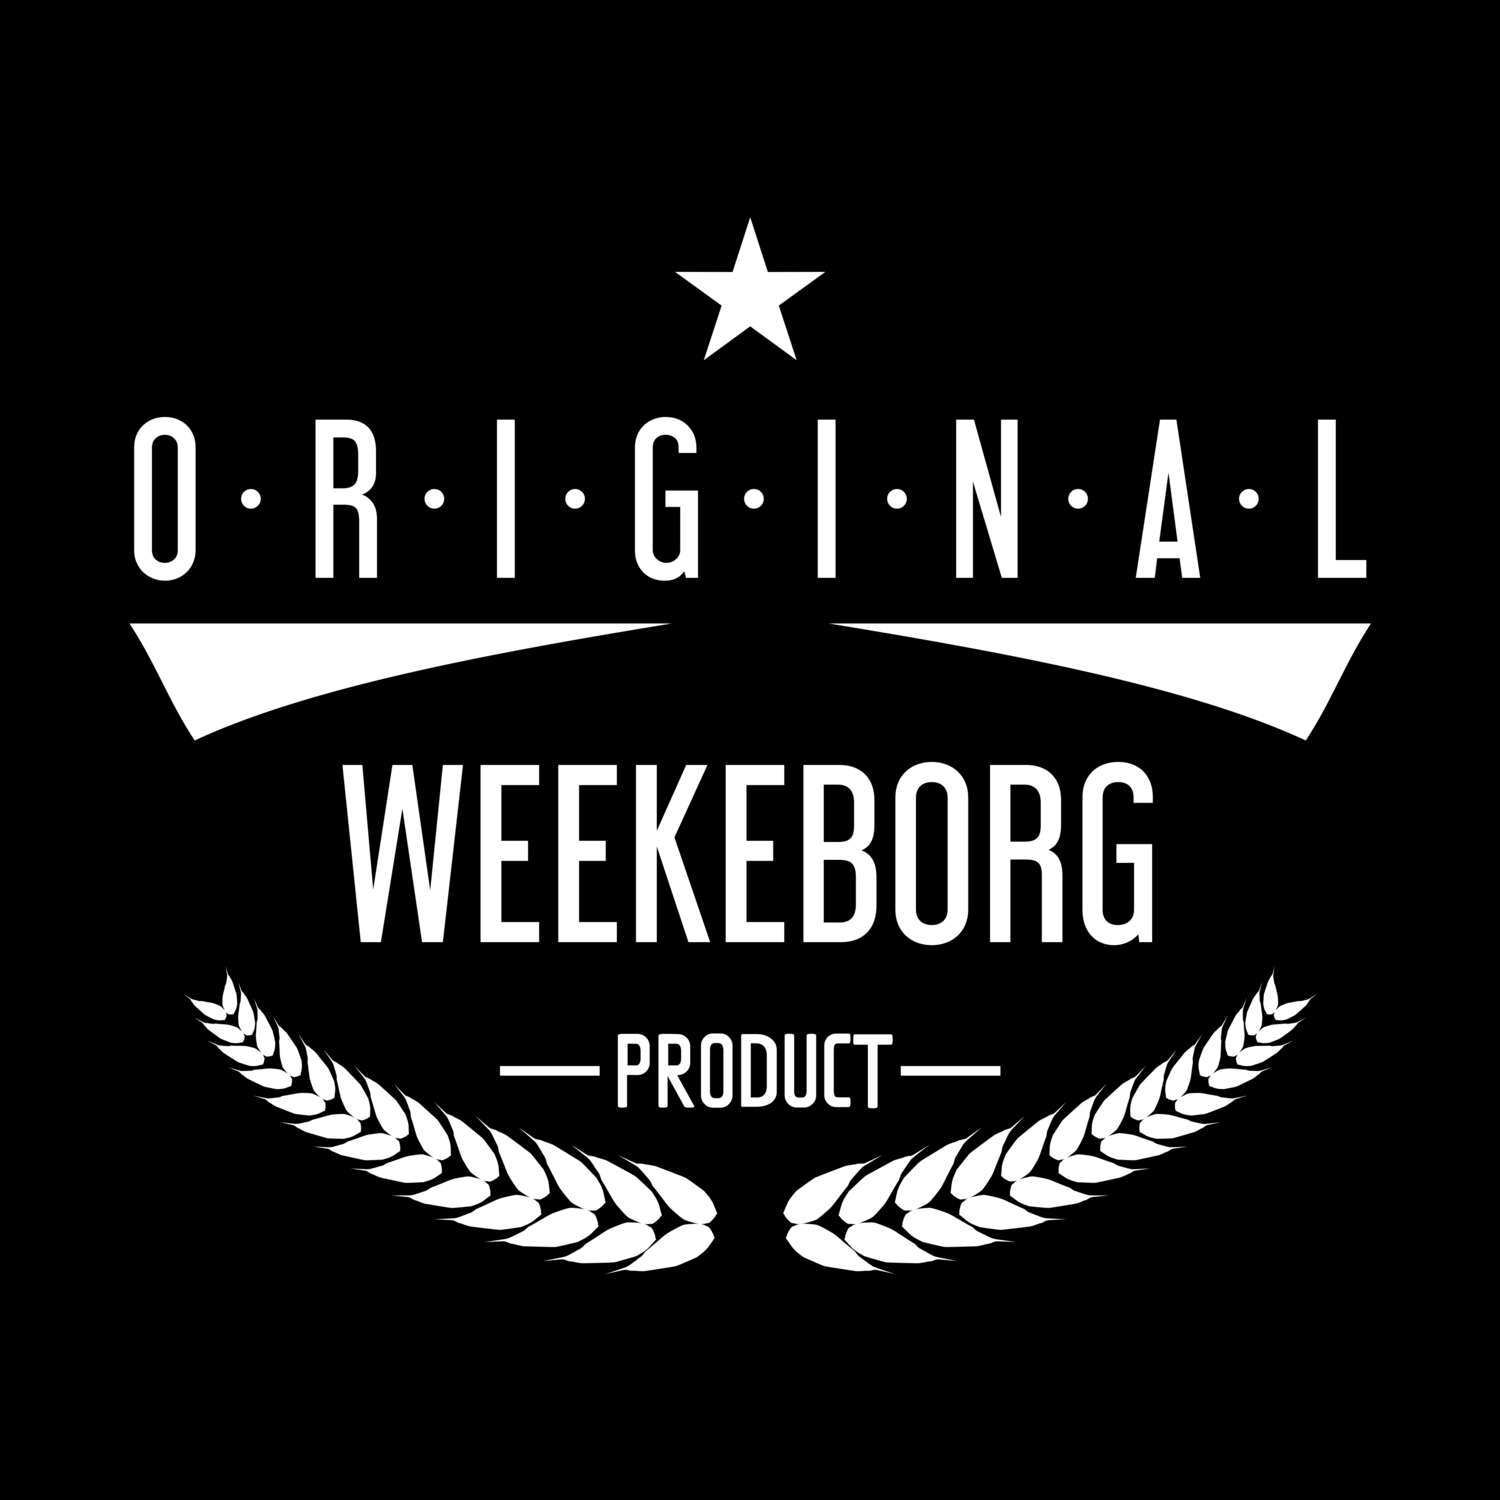 Weekeborg T-Shirt »Original Product«